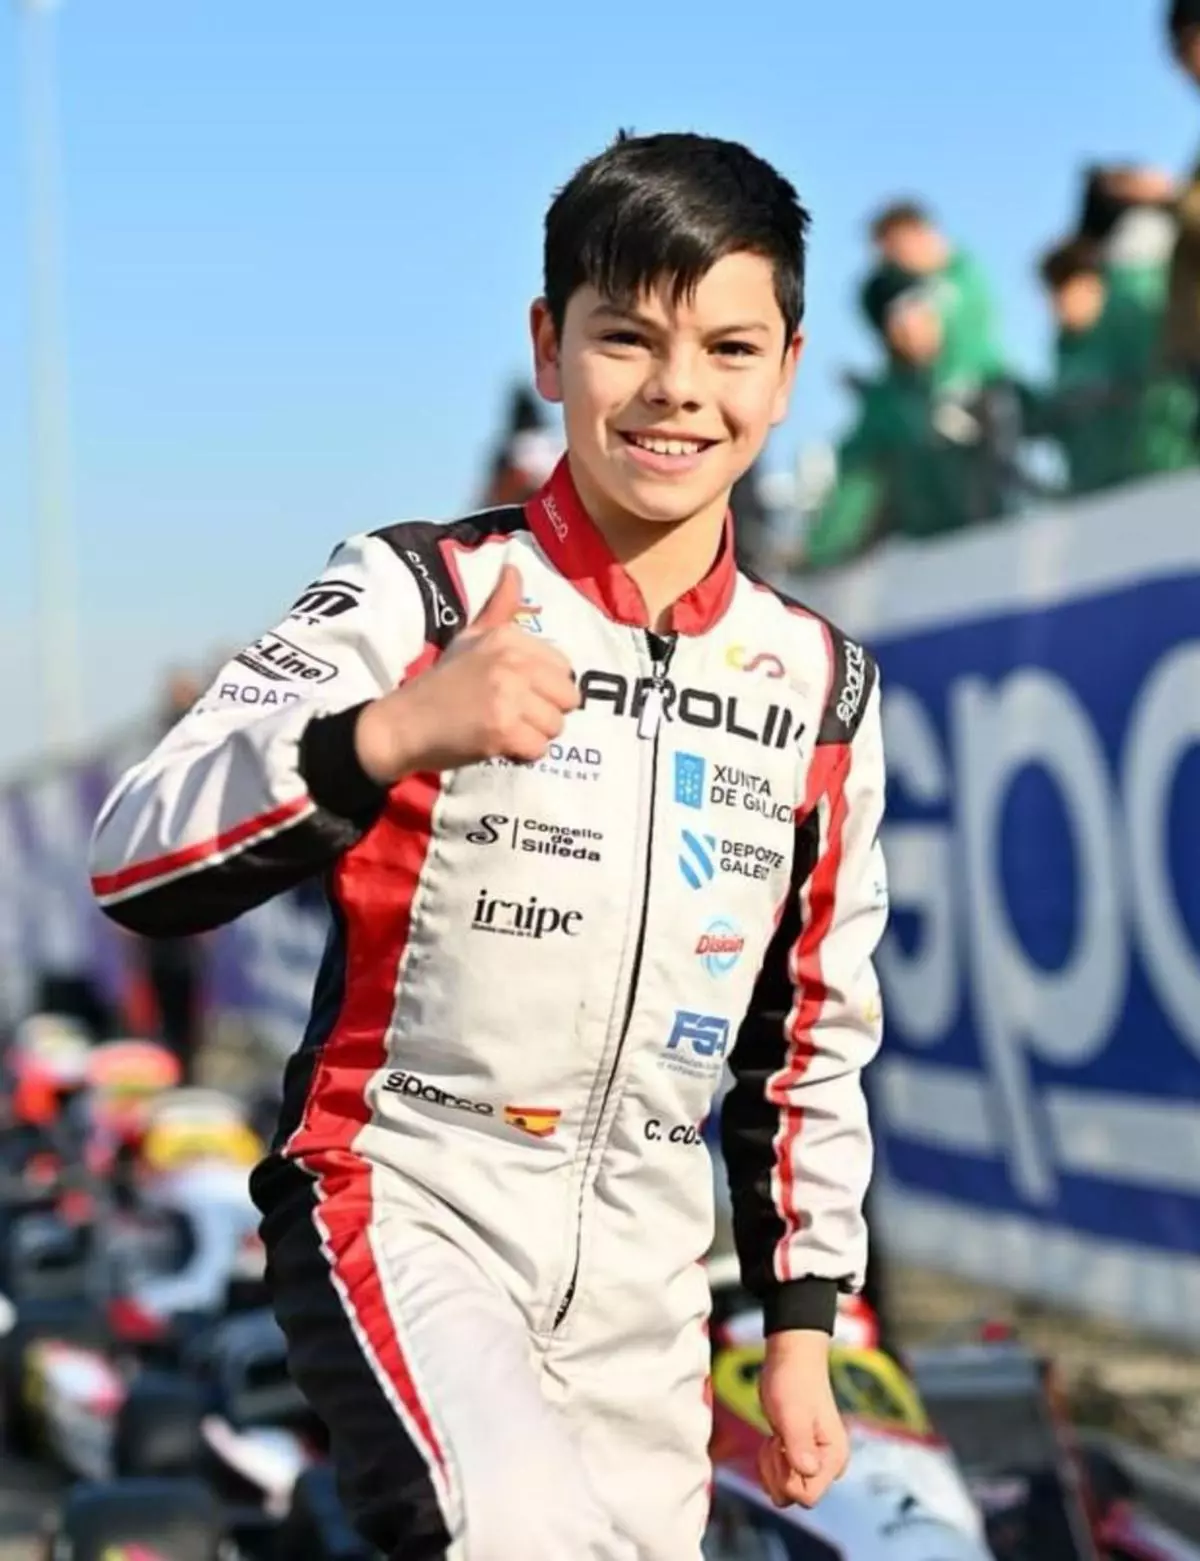 Christian Costoya escala a la cuarta plaza en el ranking FIA